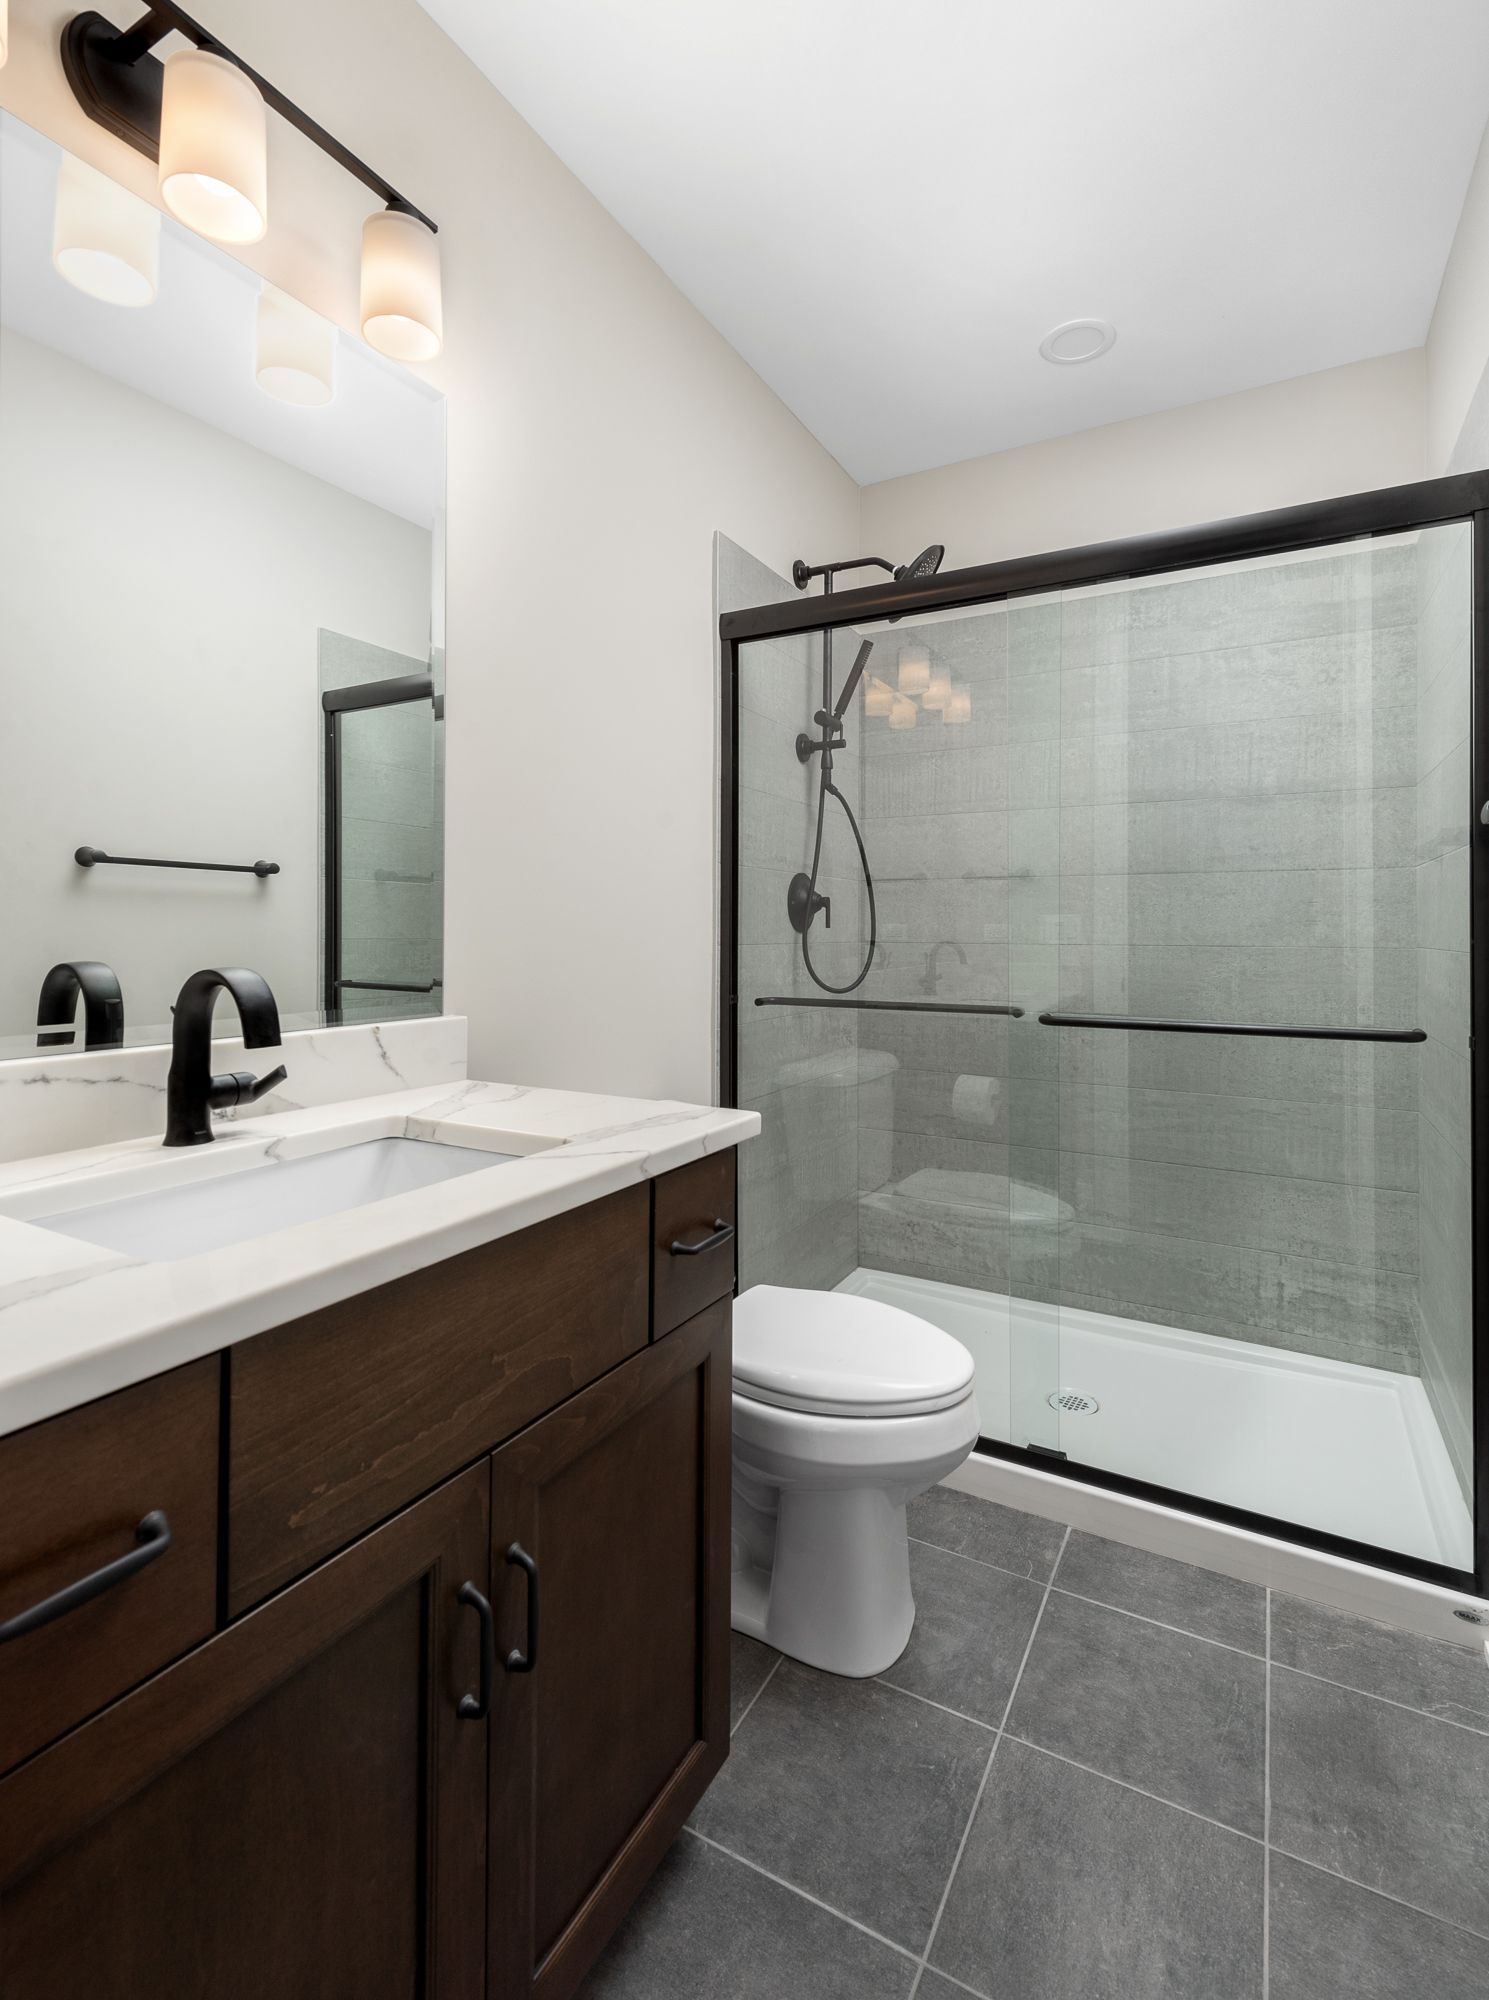 Guest bathroom with sliding glass shower doors and dark wood vanity